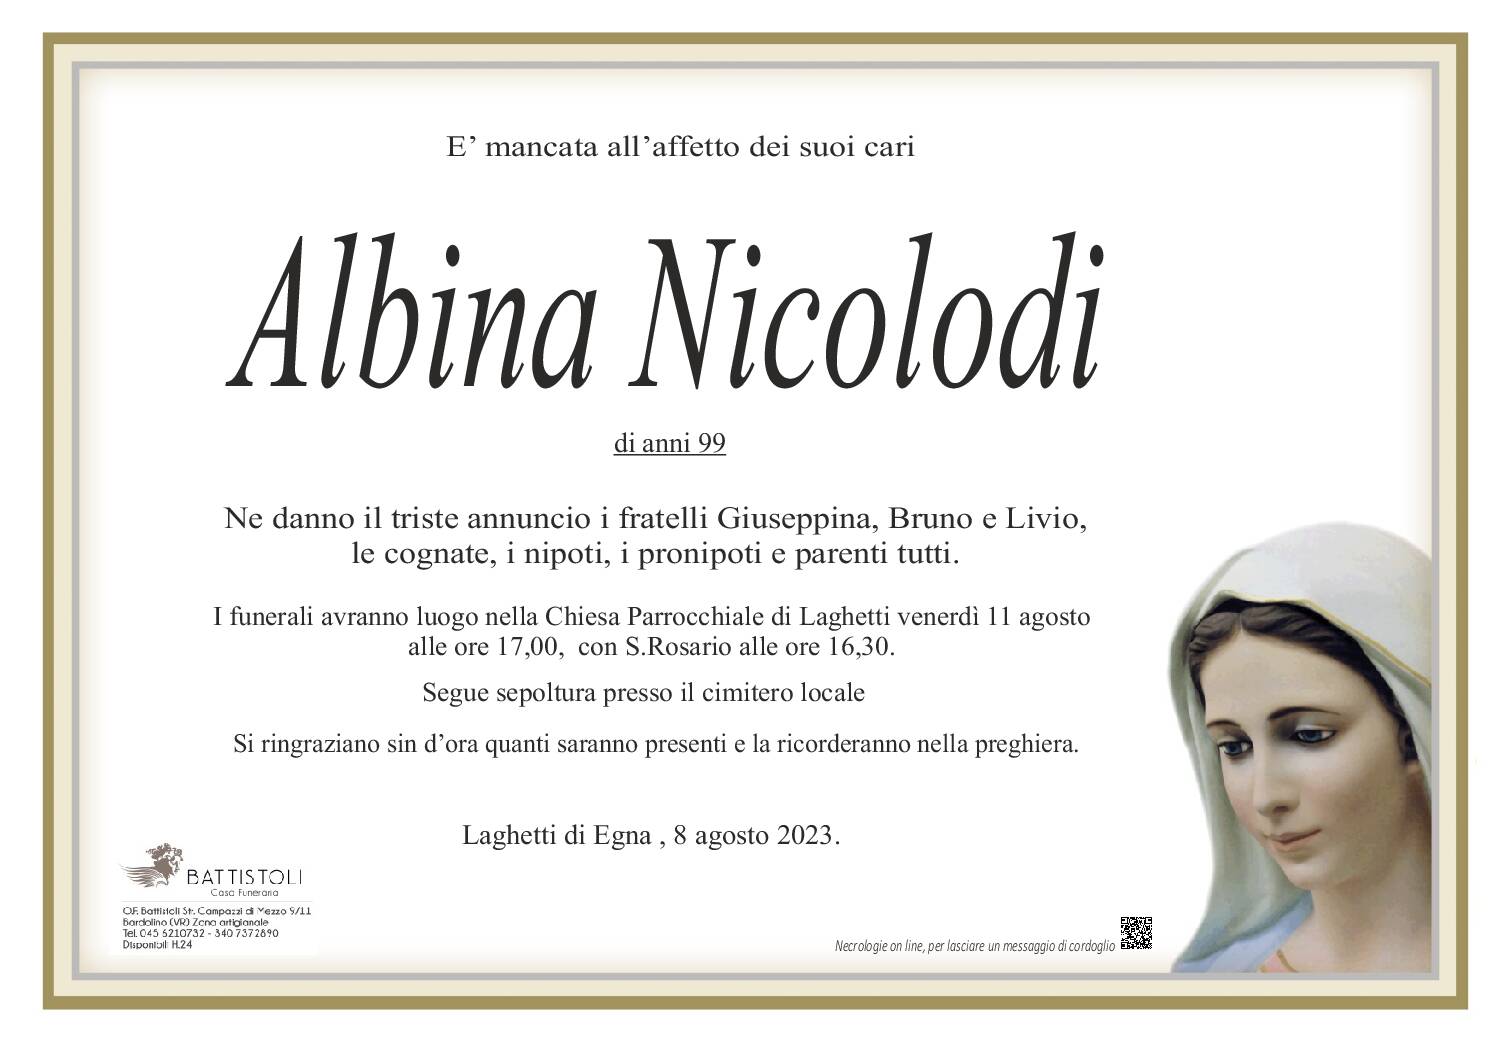 Nicolodi Albina